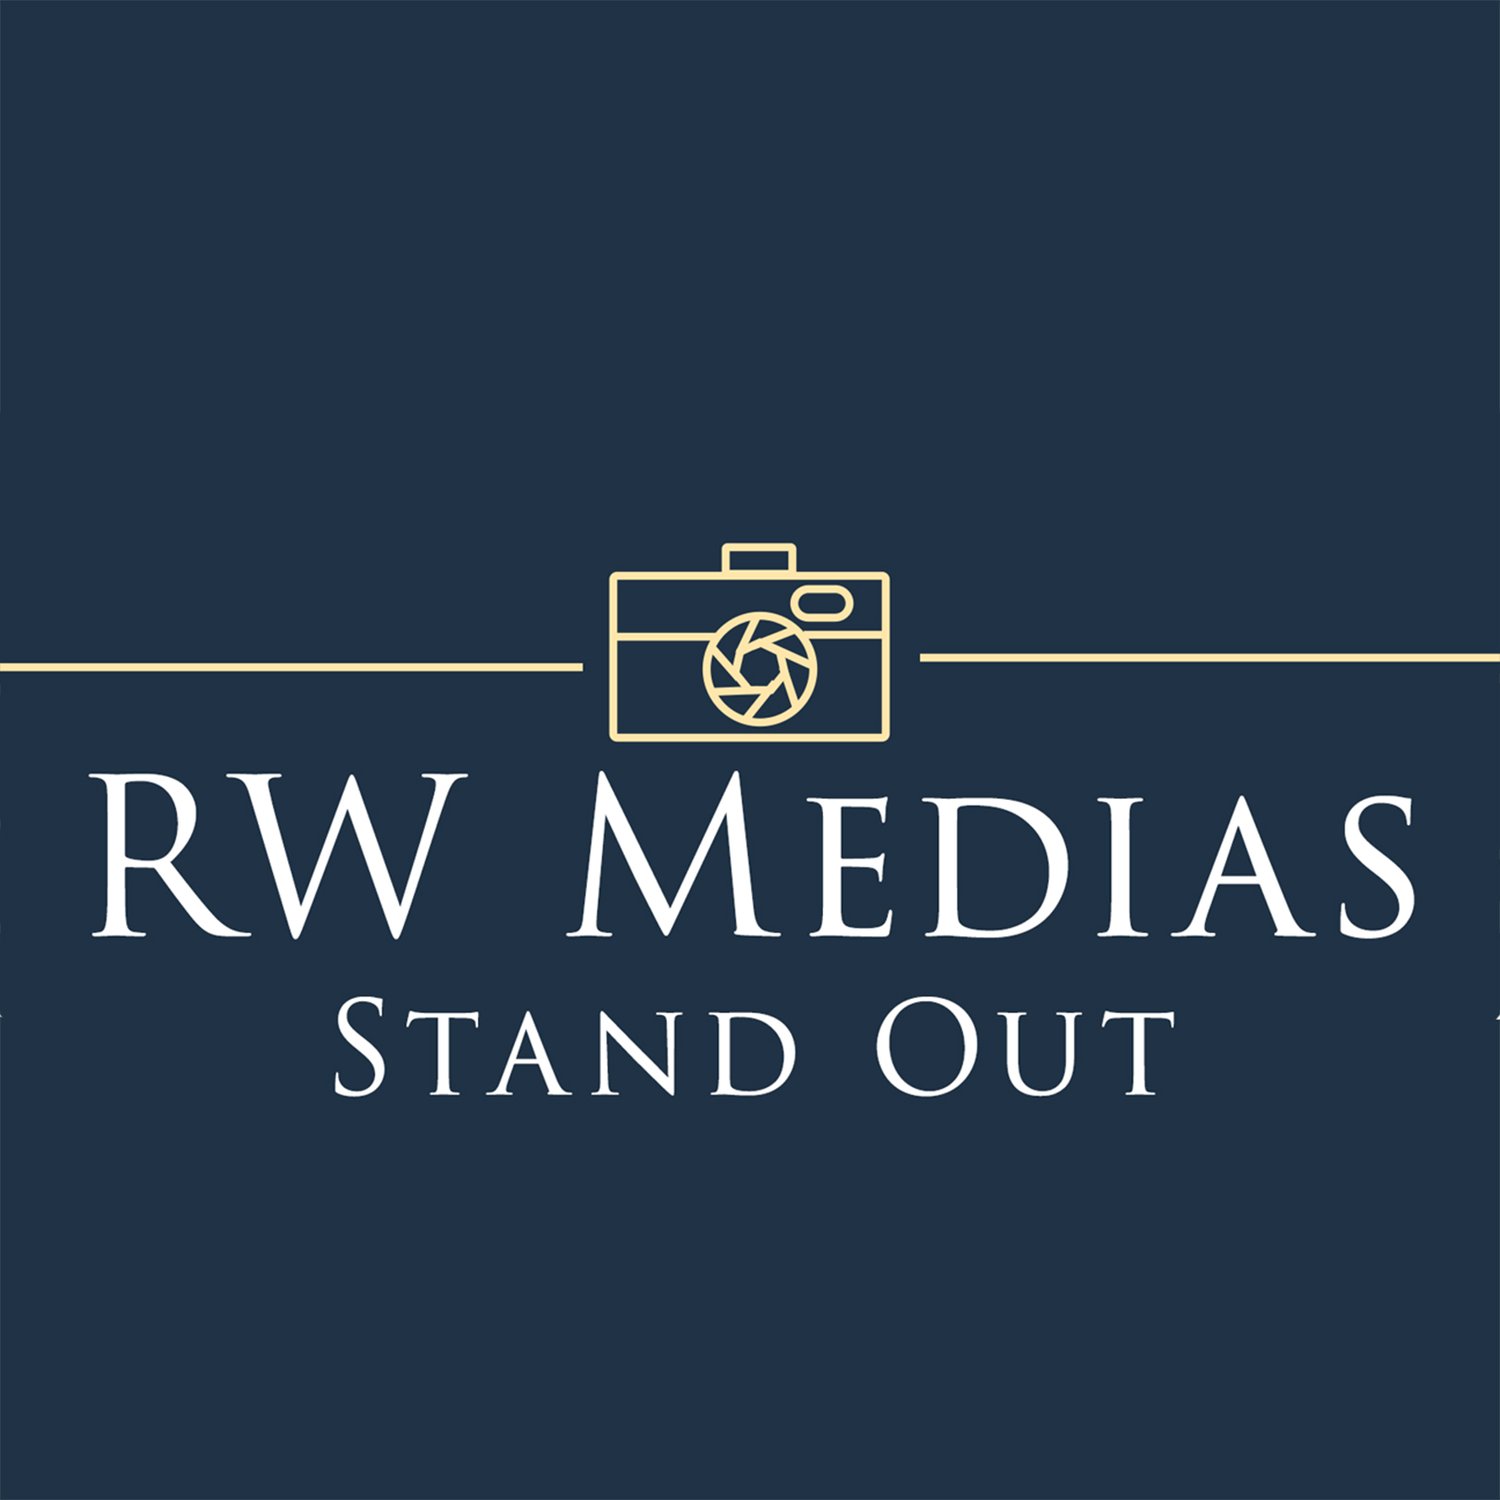 RWMedias